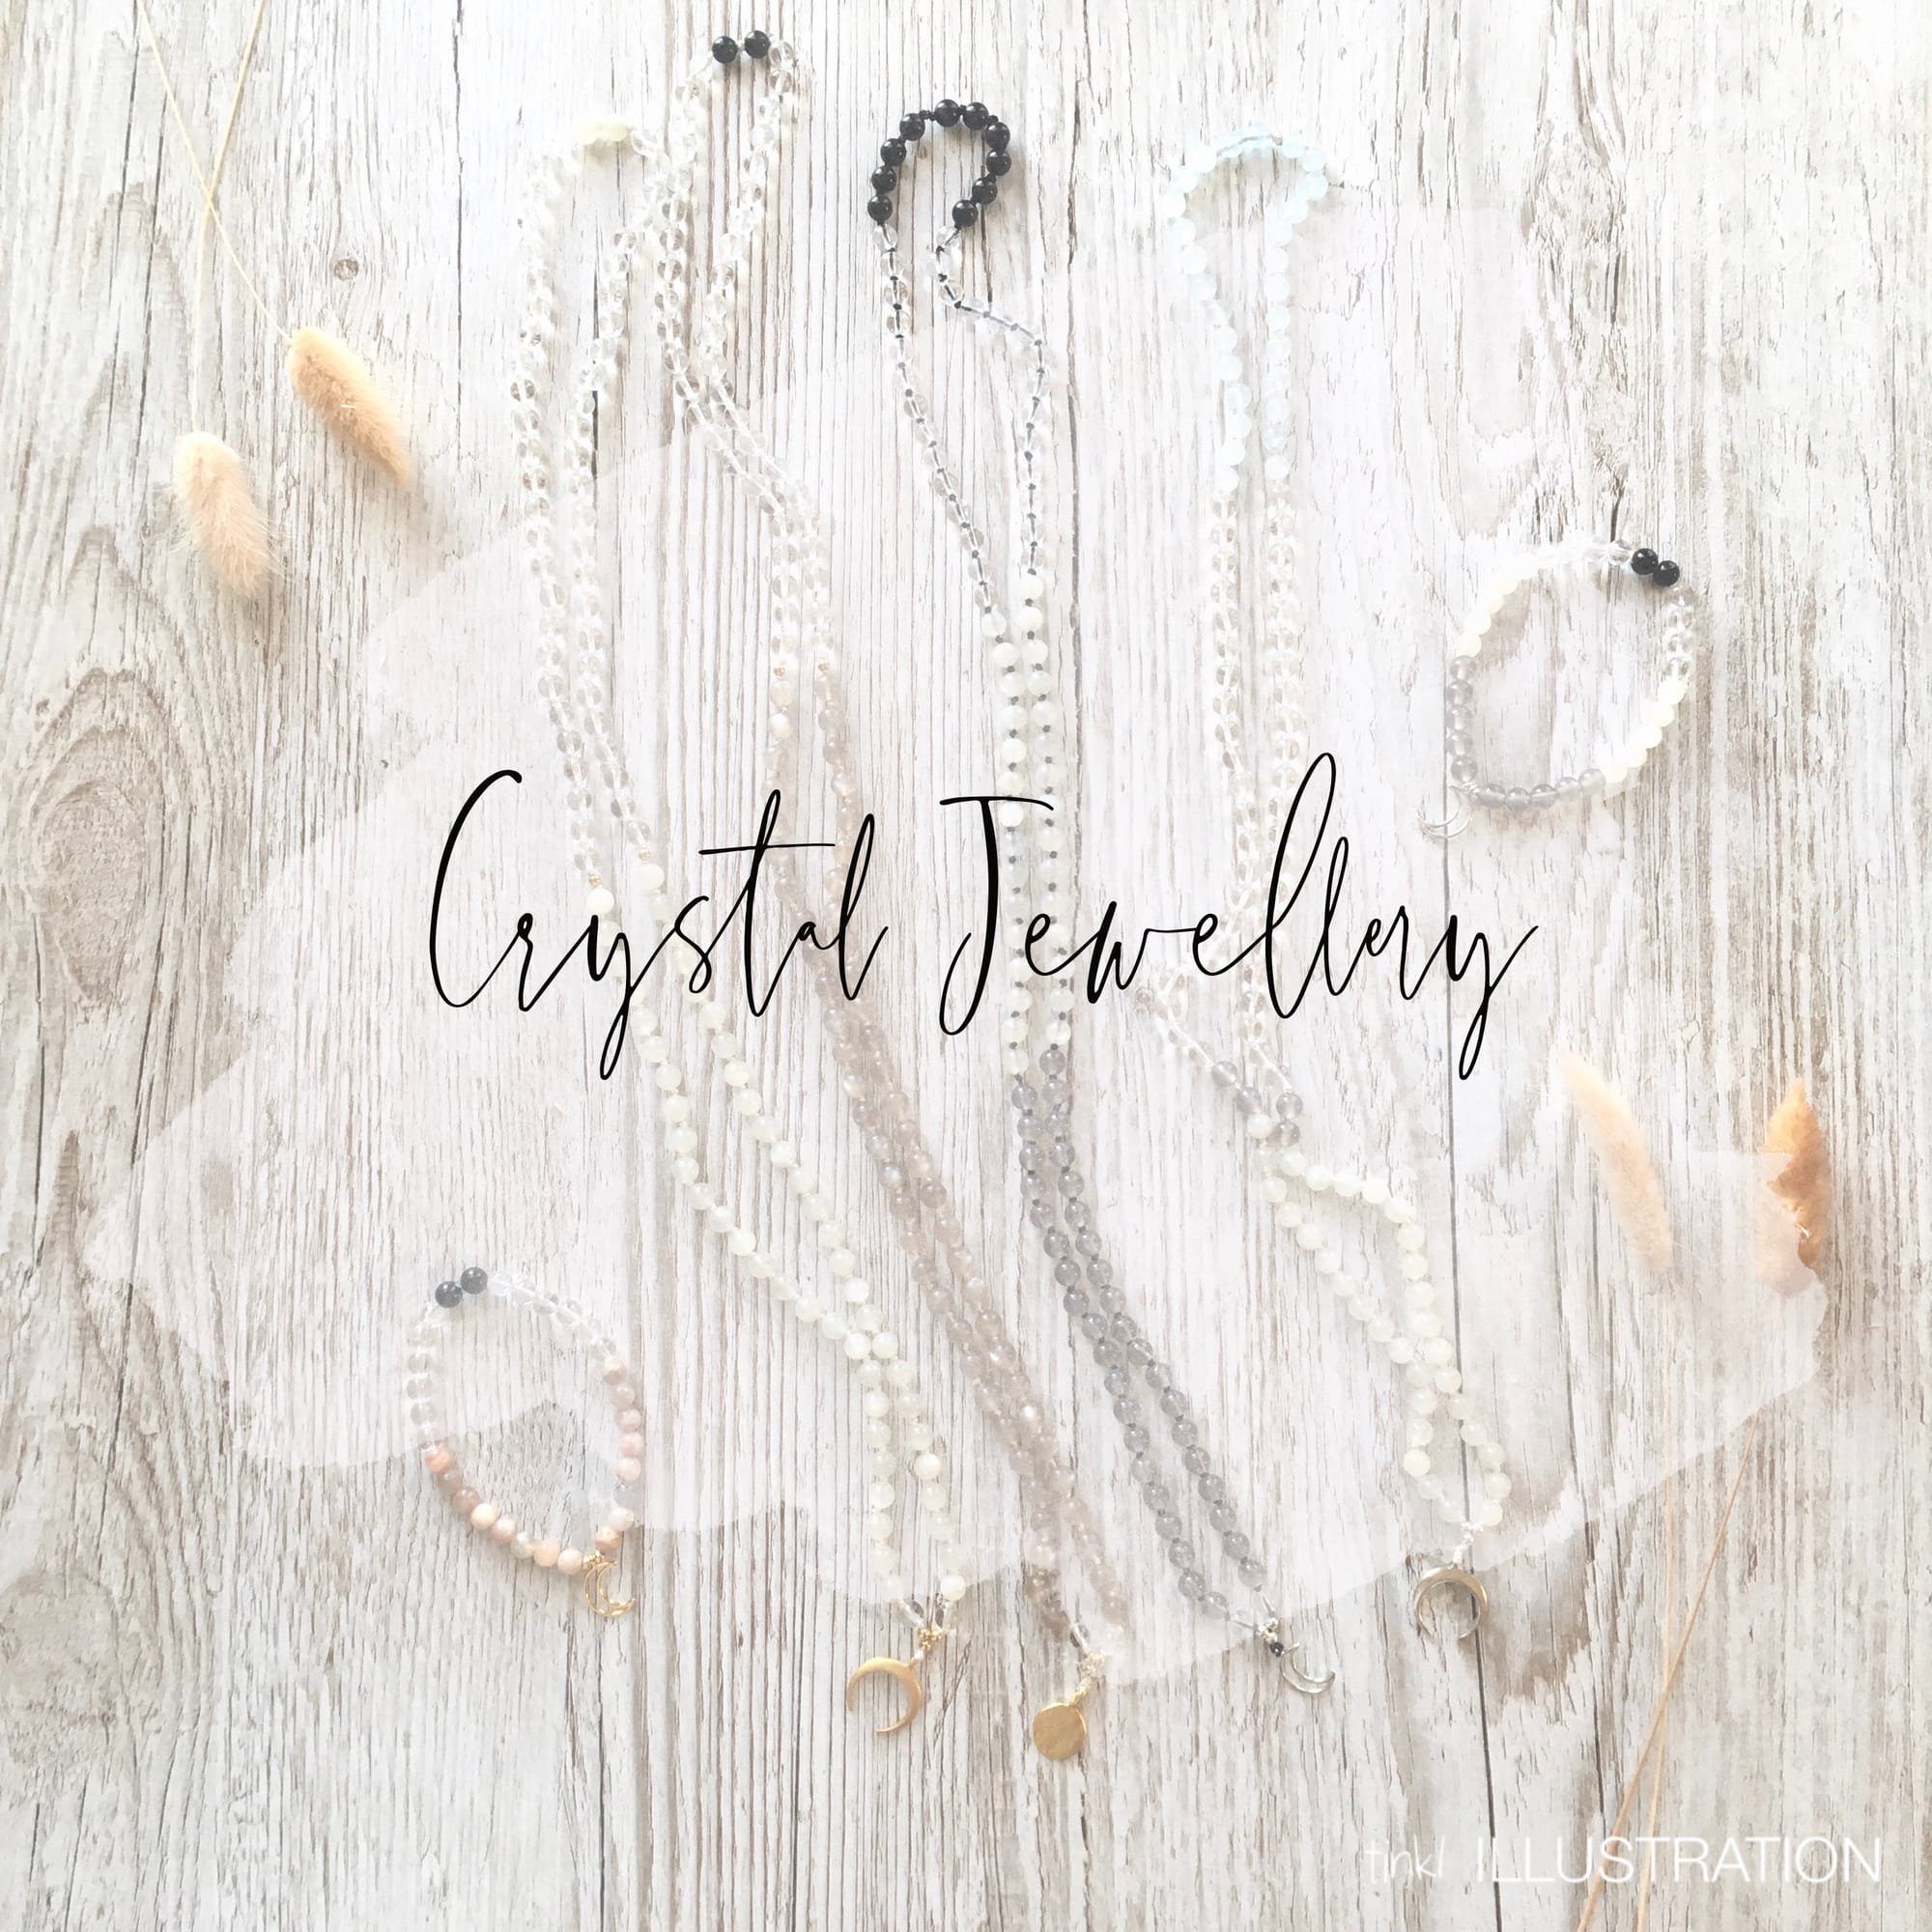 Instagram Graphic "Crystal Jewellery"